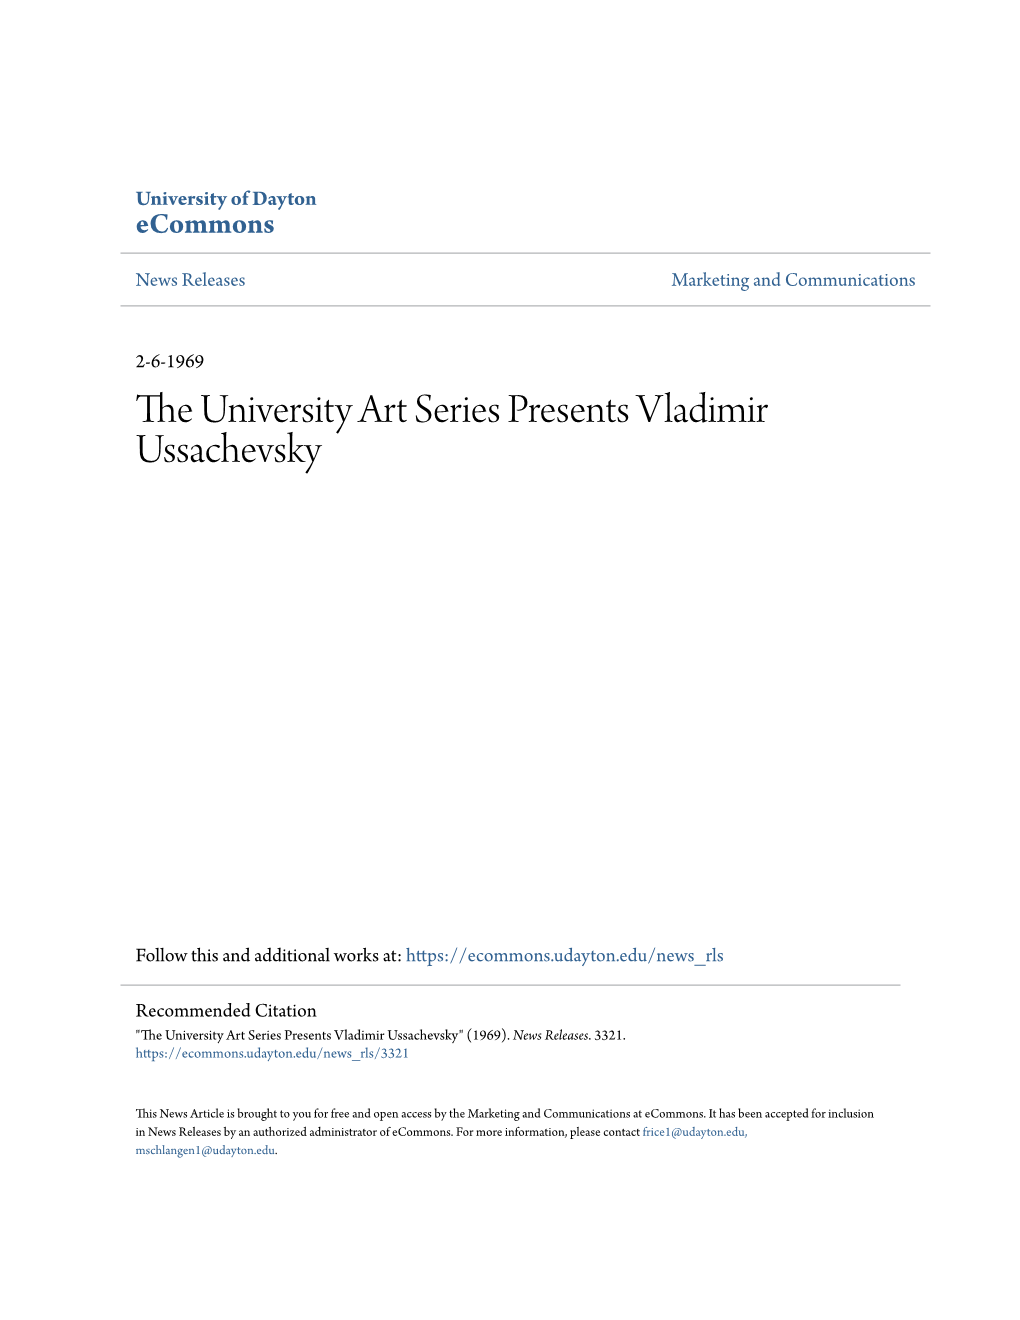 The University Art Series Presents Vladimir Ussachevsky